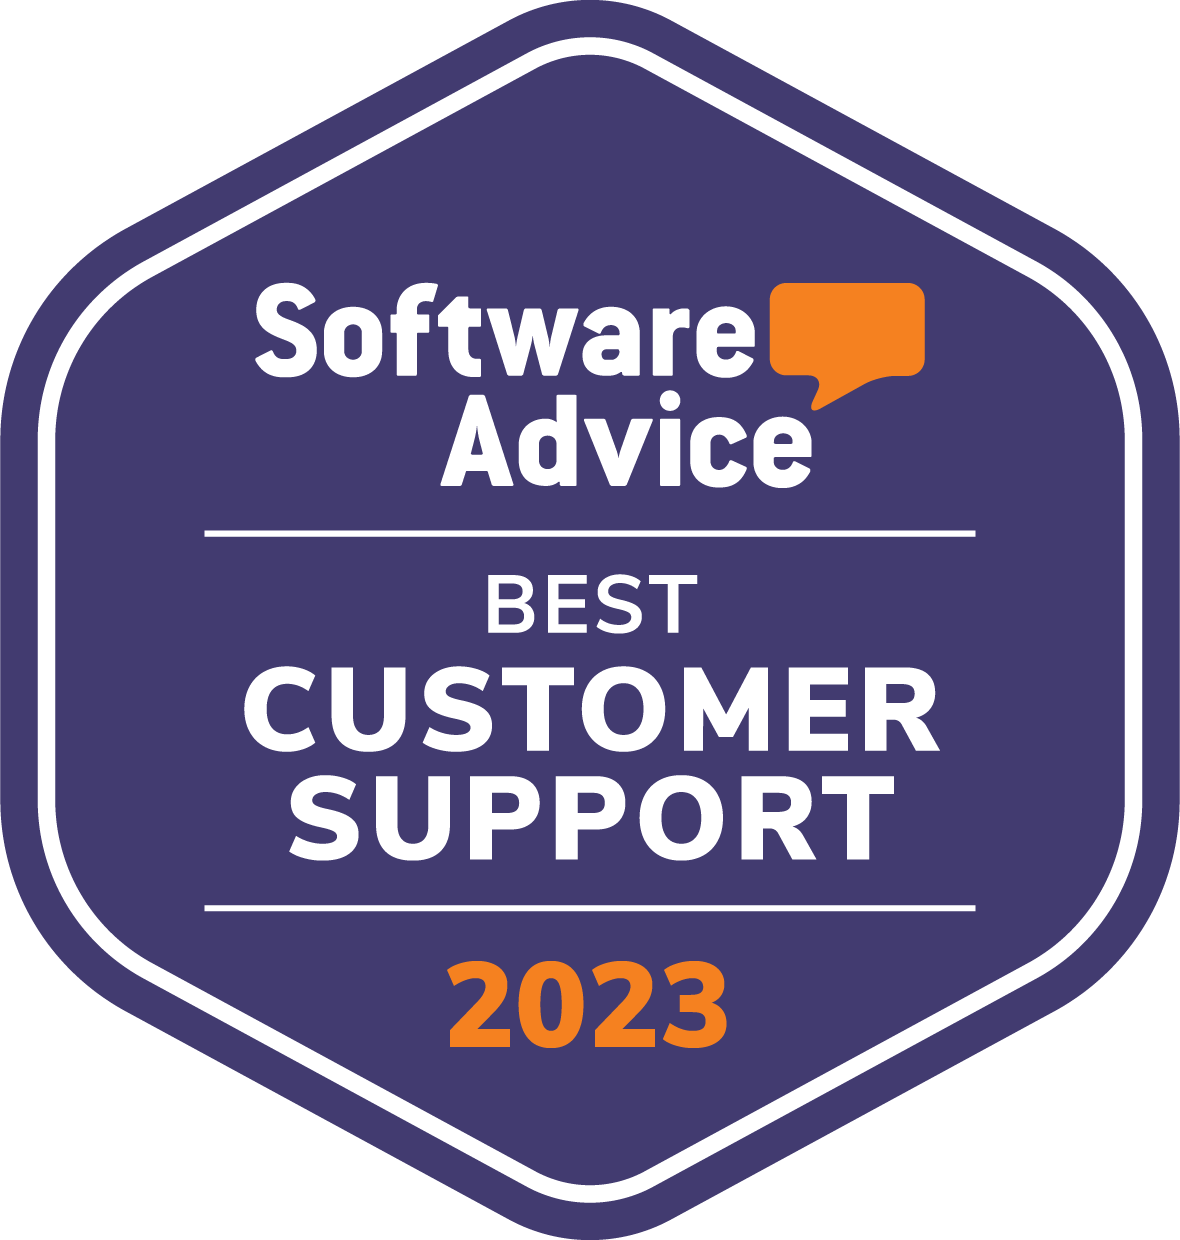 Software Advice Best customer Support 2023